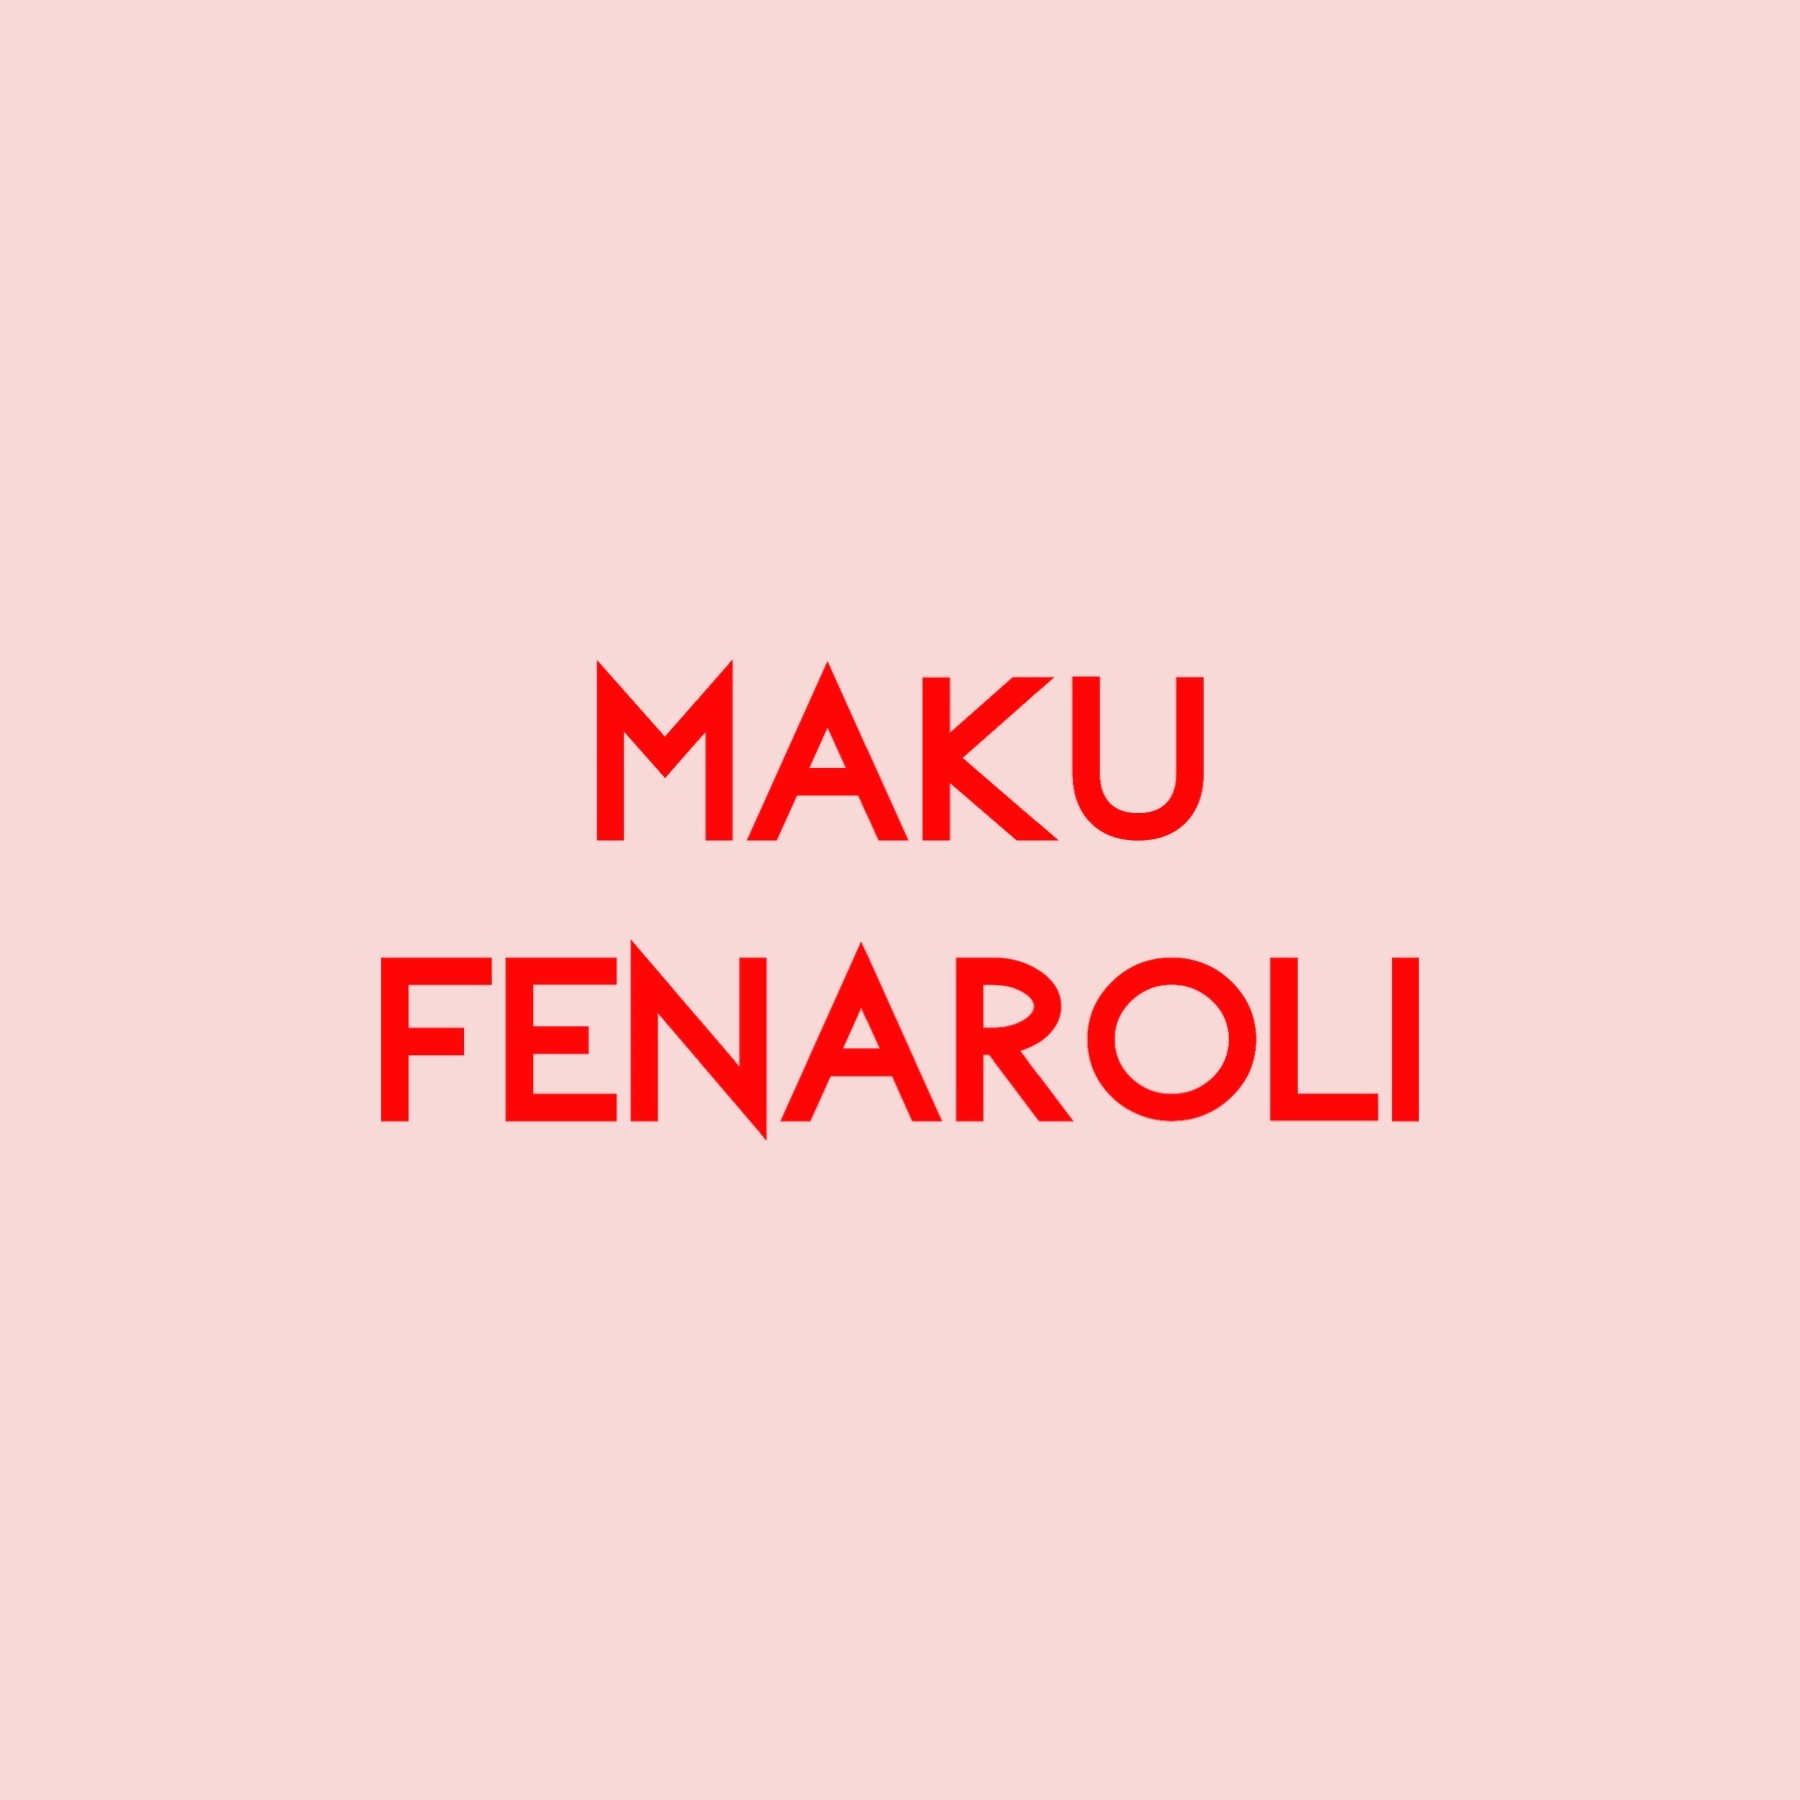 People, Landscapes, Typography, Object, Figurative, Fashion, Maku Fenaroli, Maku Fenaroli Artworks